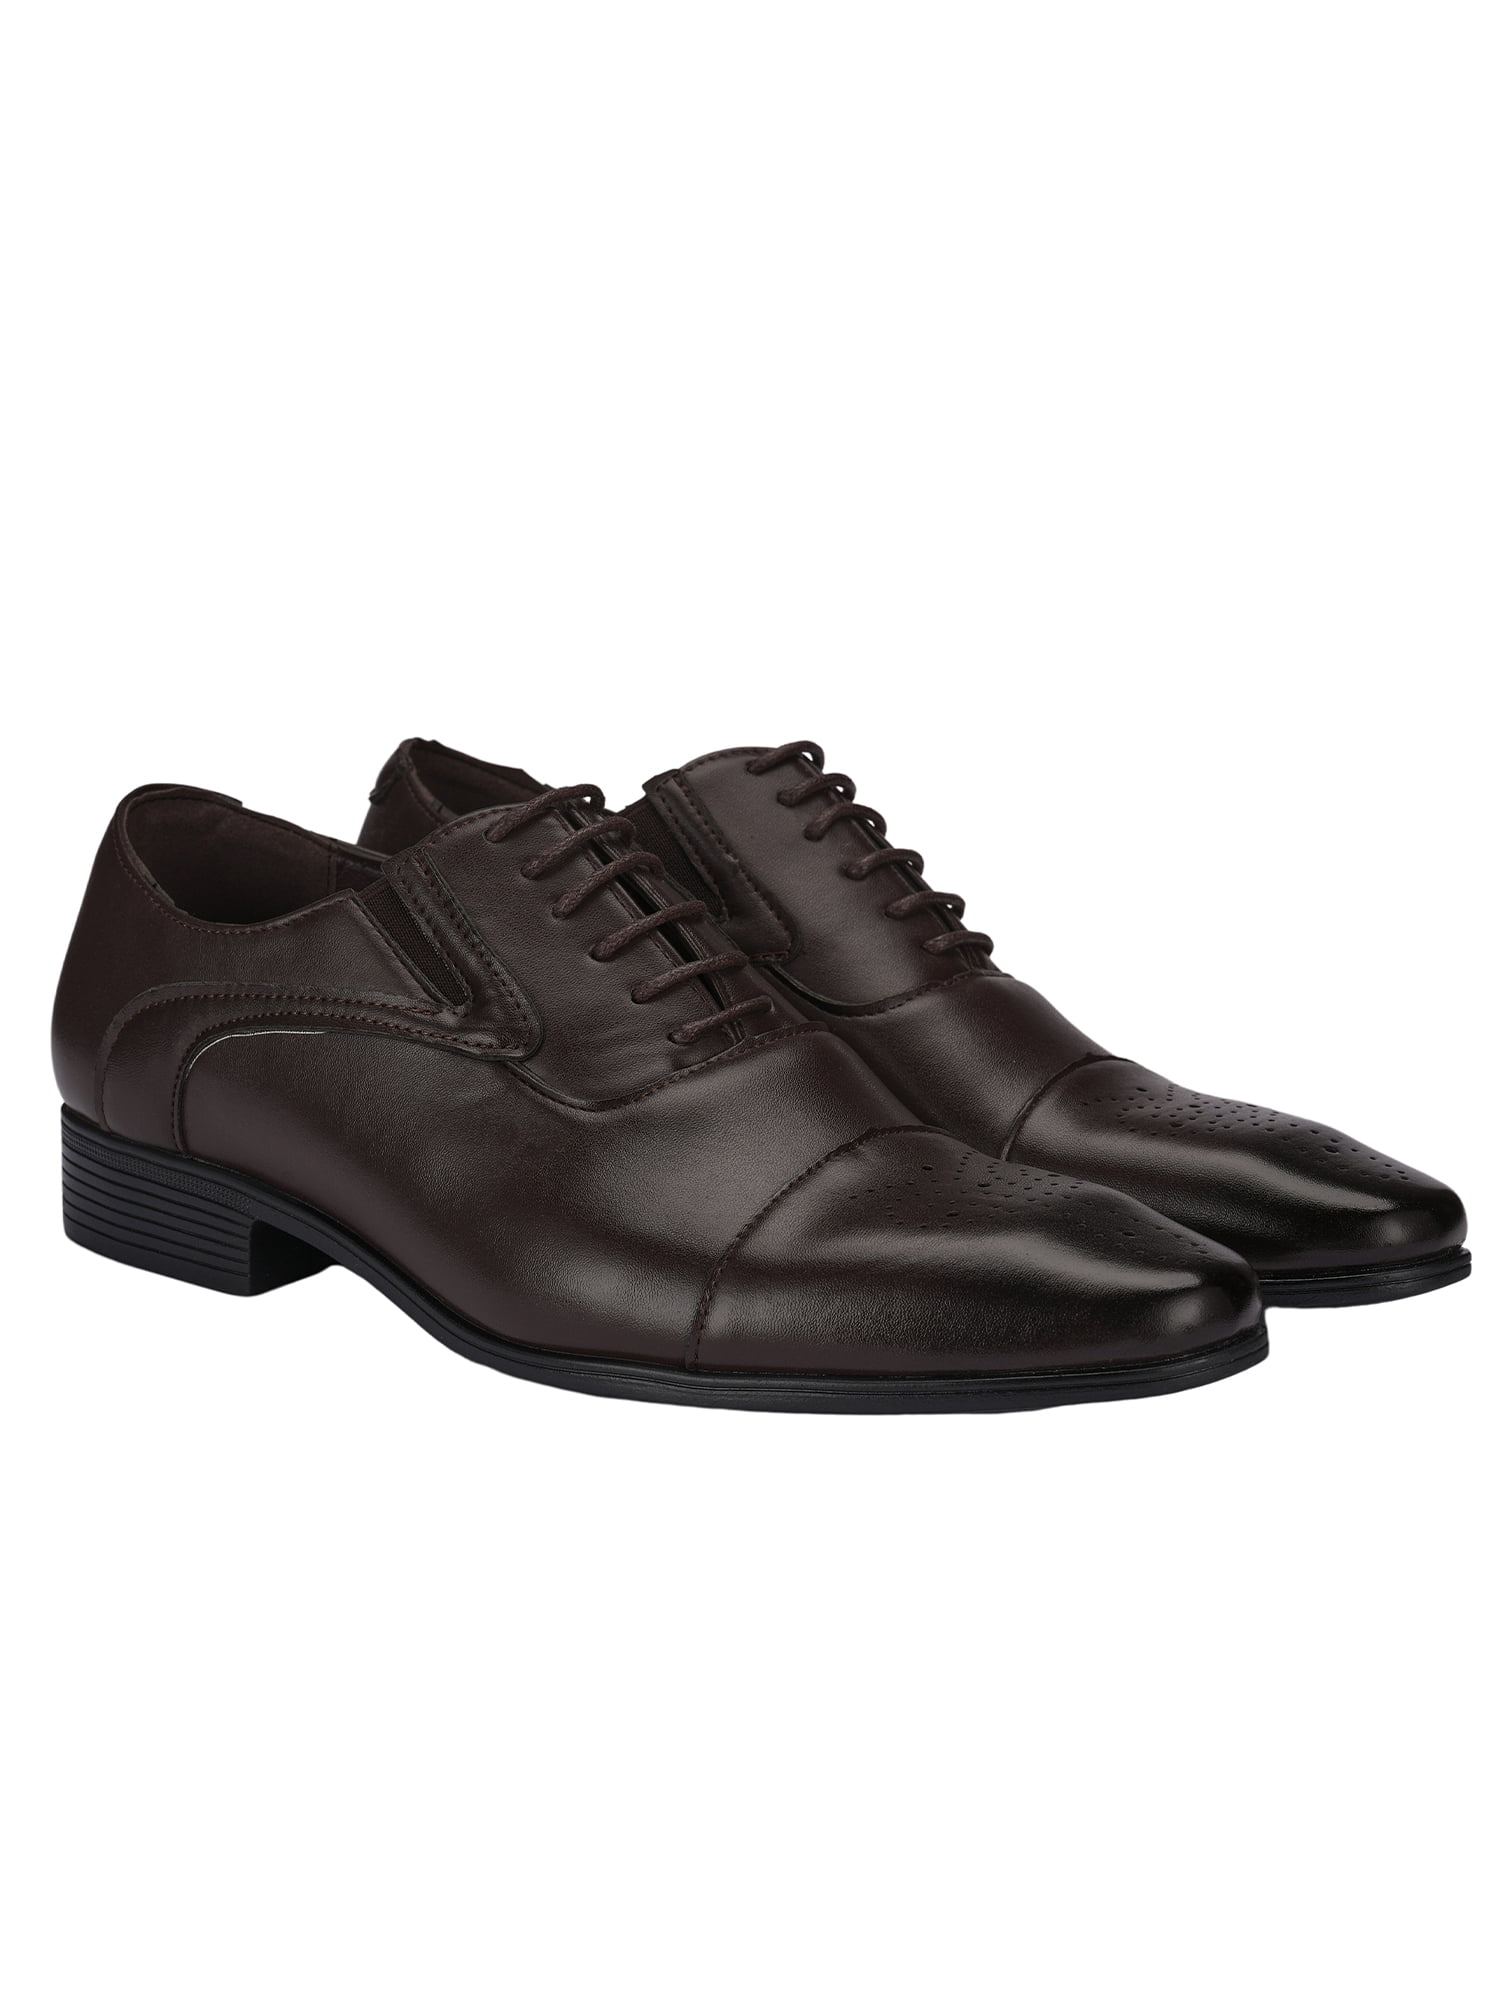 Wazshop Mens Dress Shoes Wingtips Oxford Shoe Business Brogues Comfort ...